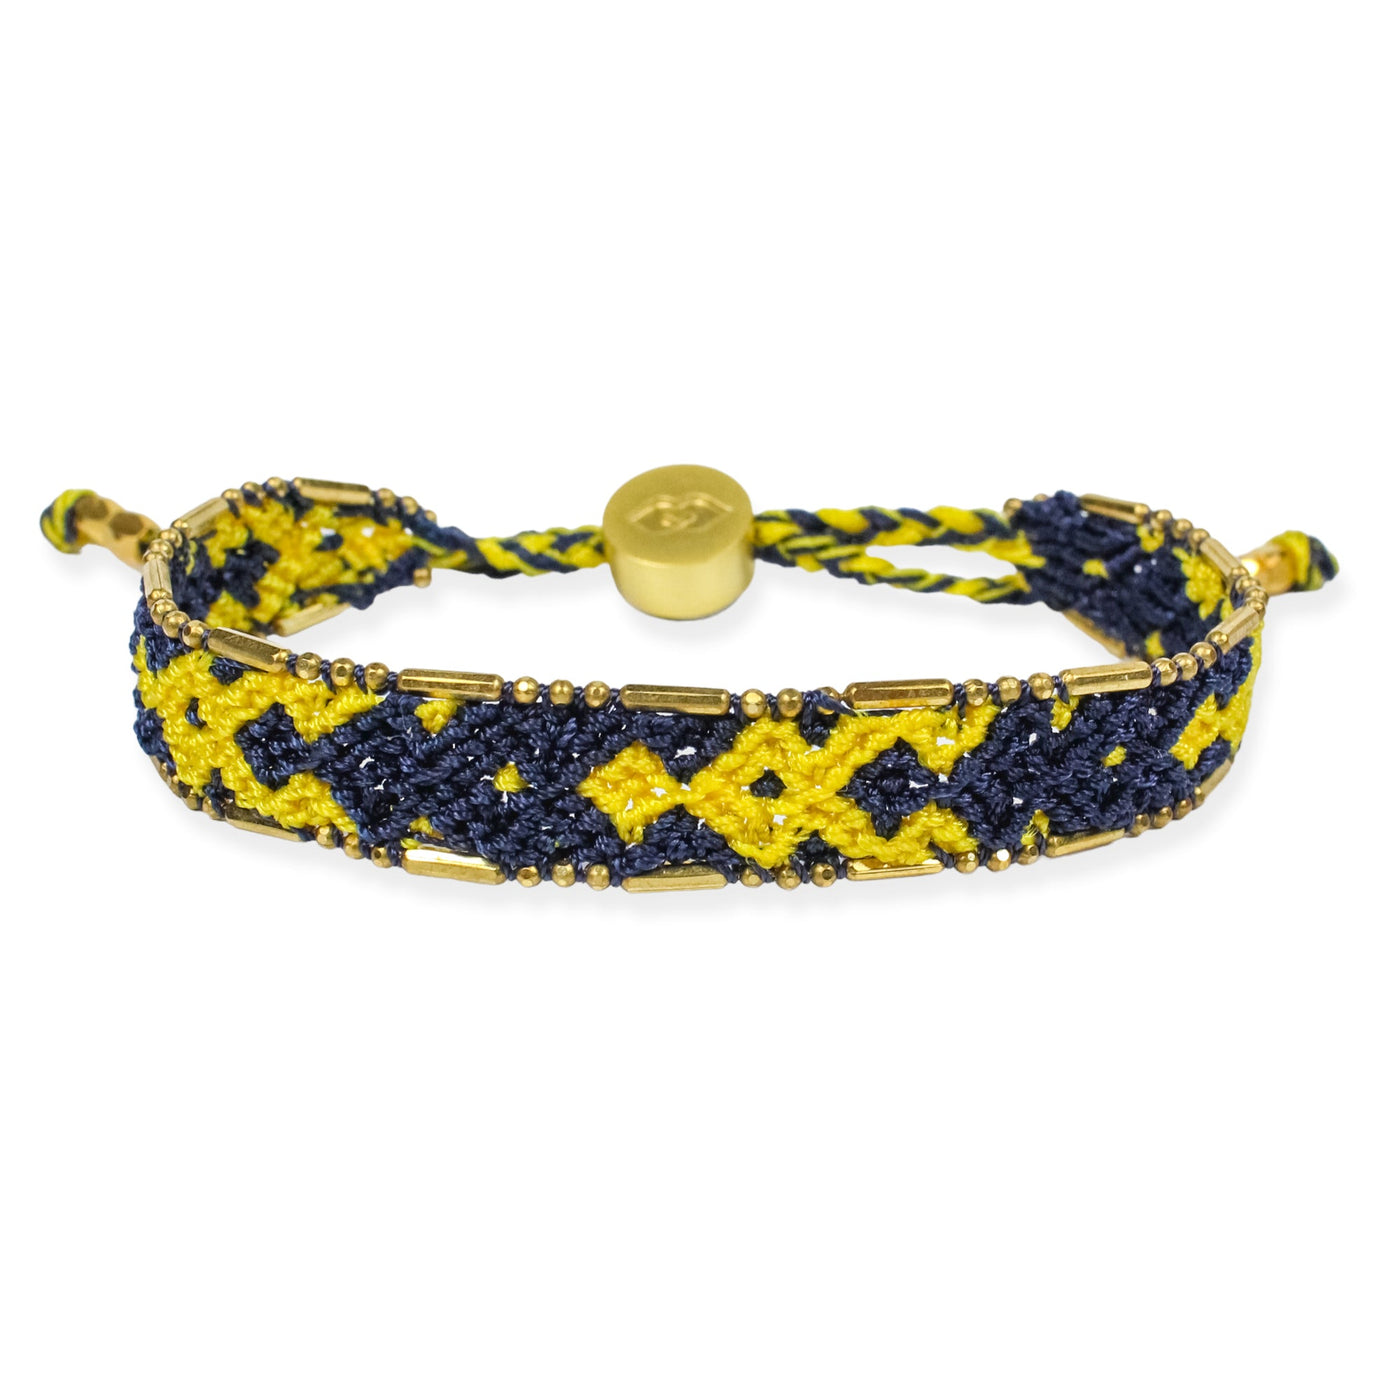 Bali Friendship Bracelet - Navy and Yellow